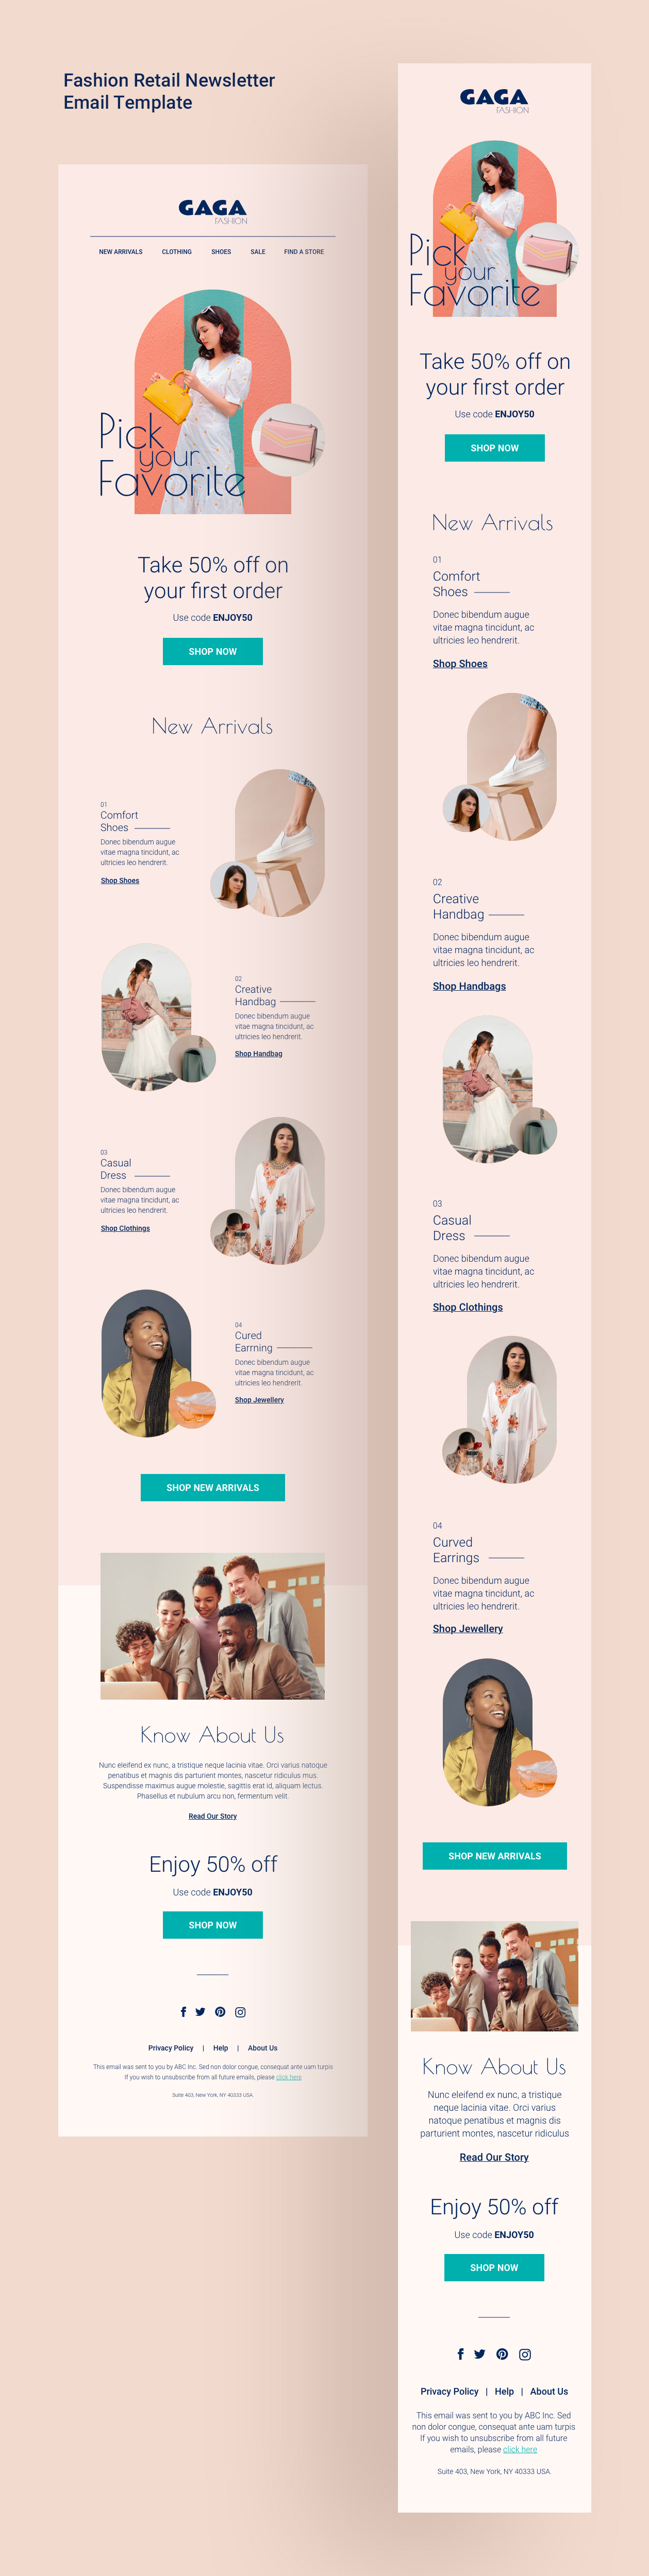 GAGA - Fashion Retail Newsletter Email Template by webduckdesign, visual art